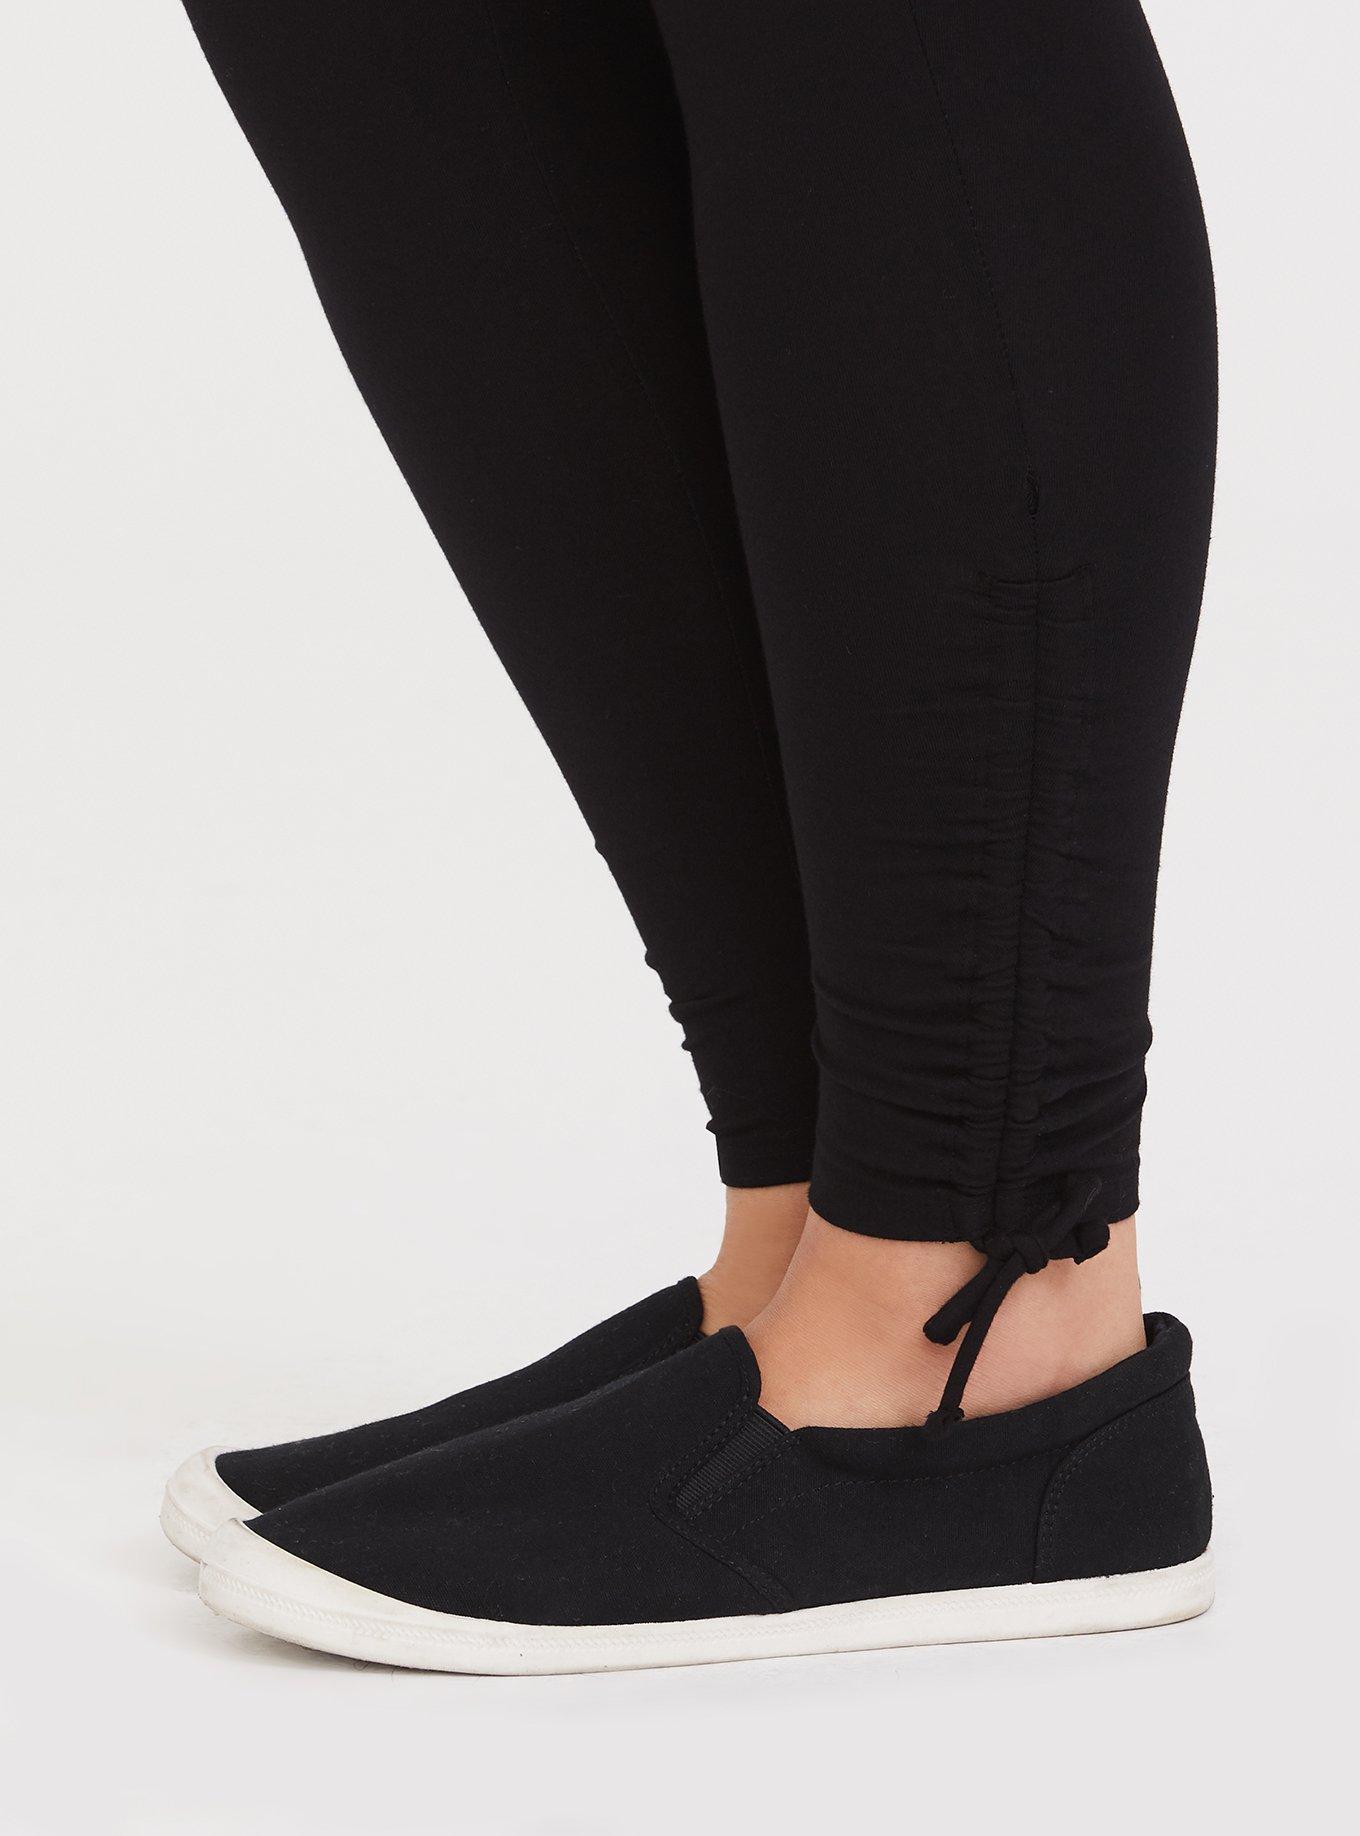 Plus Size - Premium Legging - Drawstring Hem Black - Torrid